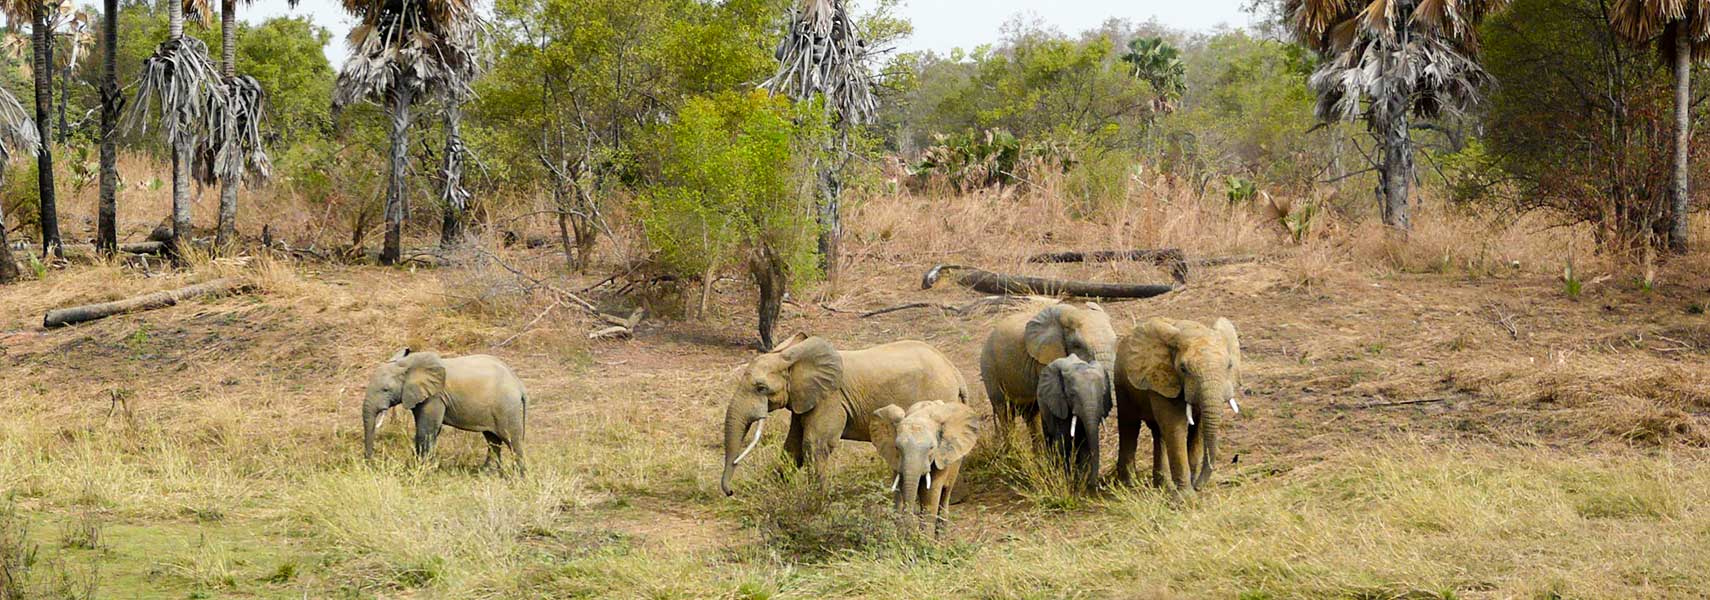 Elephants at Pendjari National Park in Benin